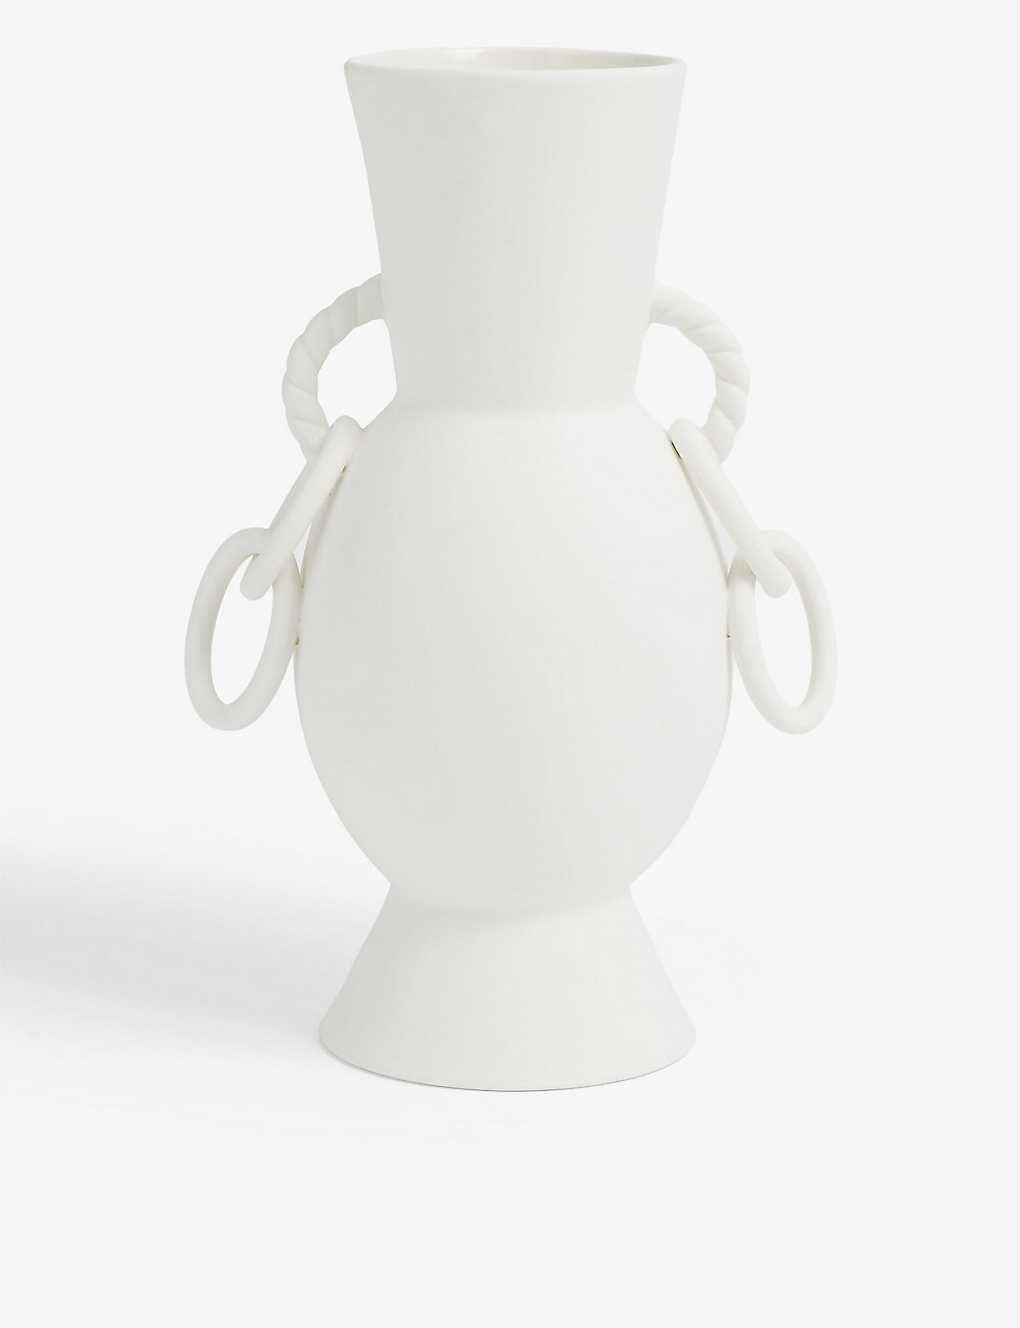 Chain Reaction ceramic vase 18cm | Selfridges